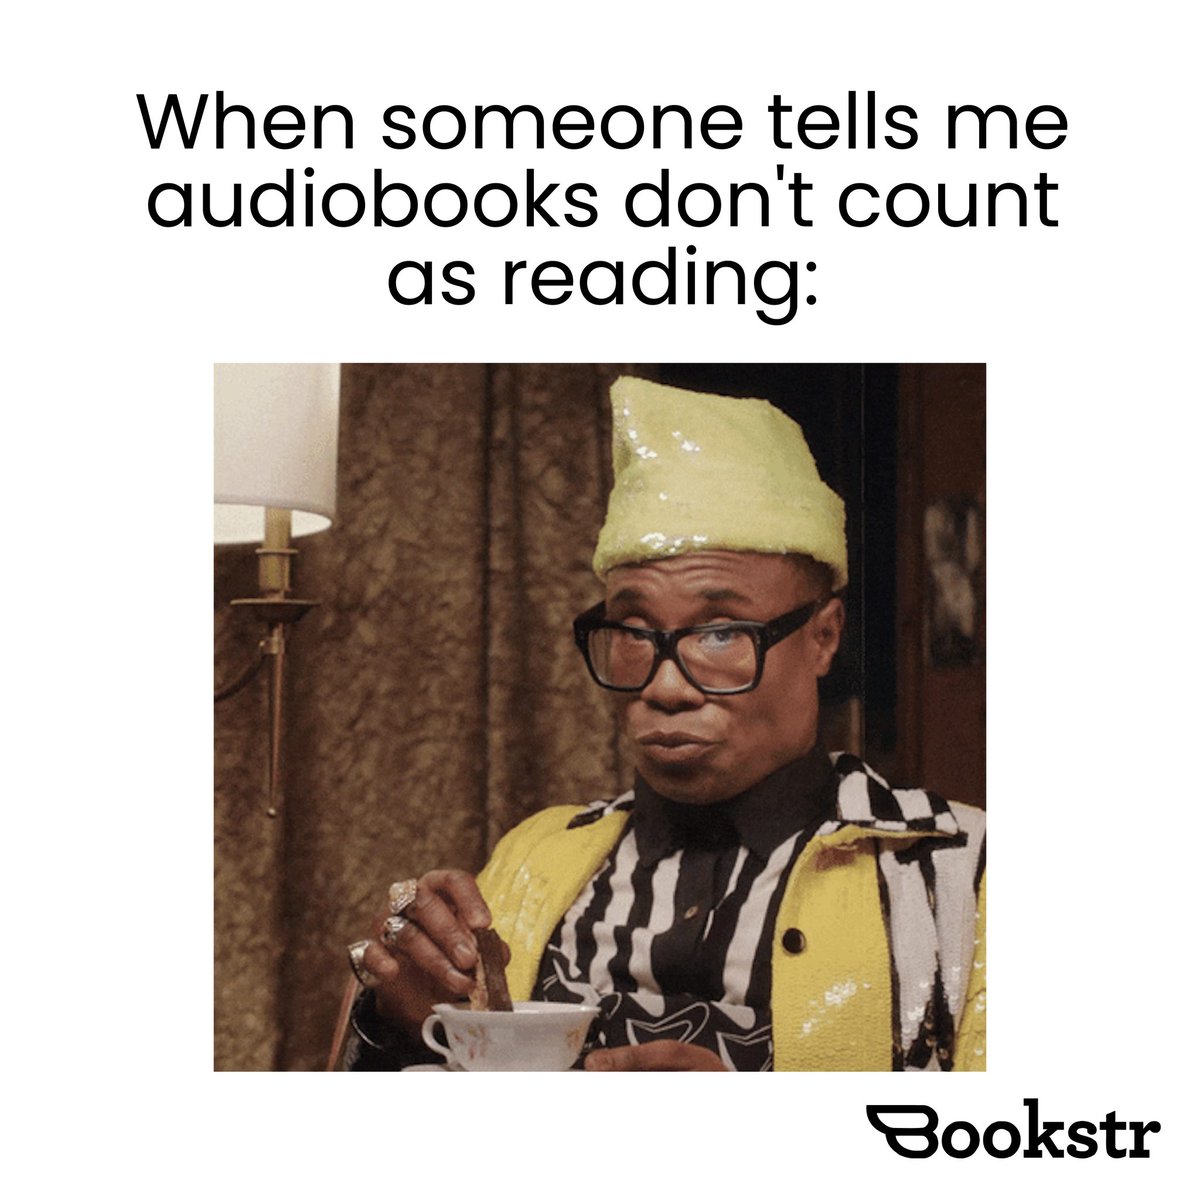 Uh, yeah they do! 
#bookworm #readingrocks #welovebooks #ratherbereading #goodbook #tbrpile #readingmemes #bookmemes #bookhumor #readingquotes ️